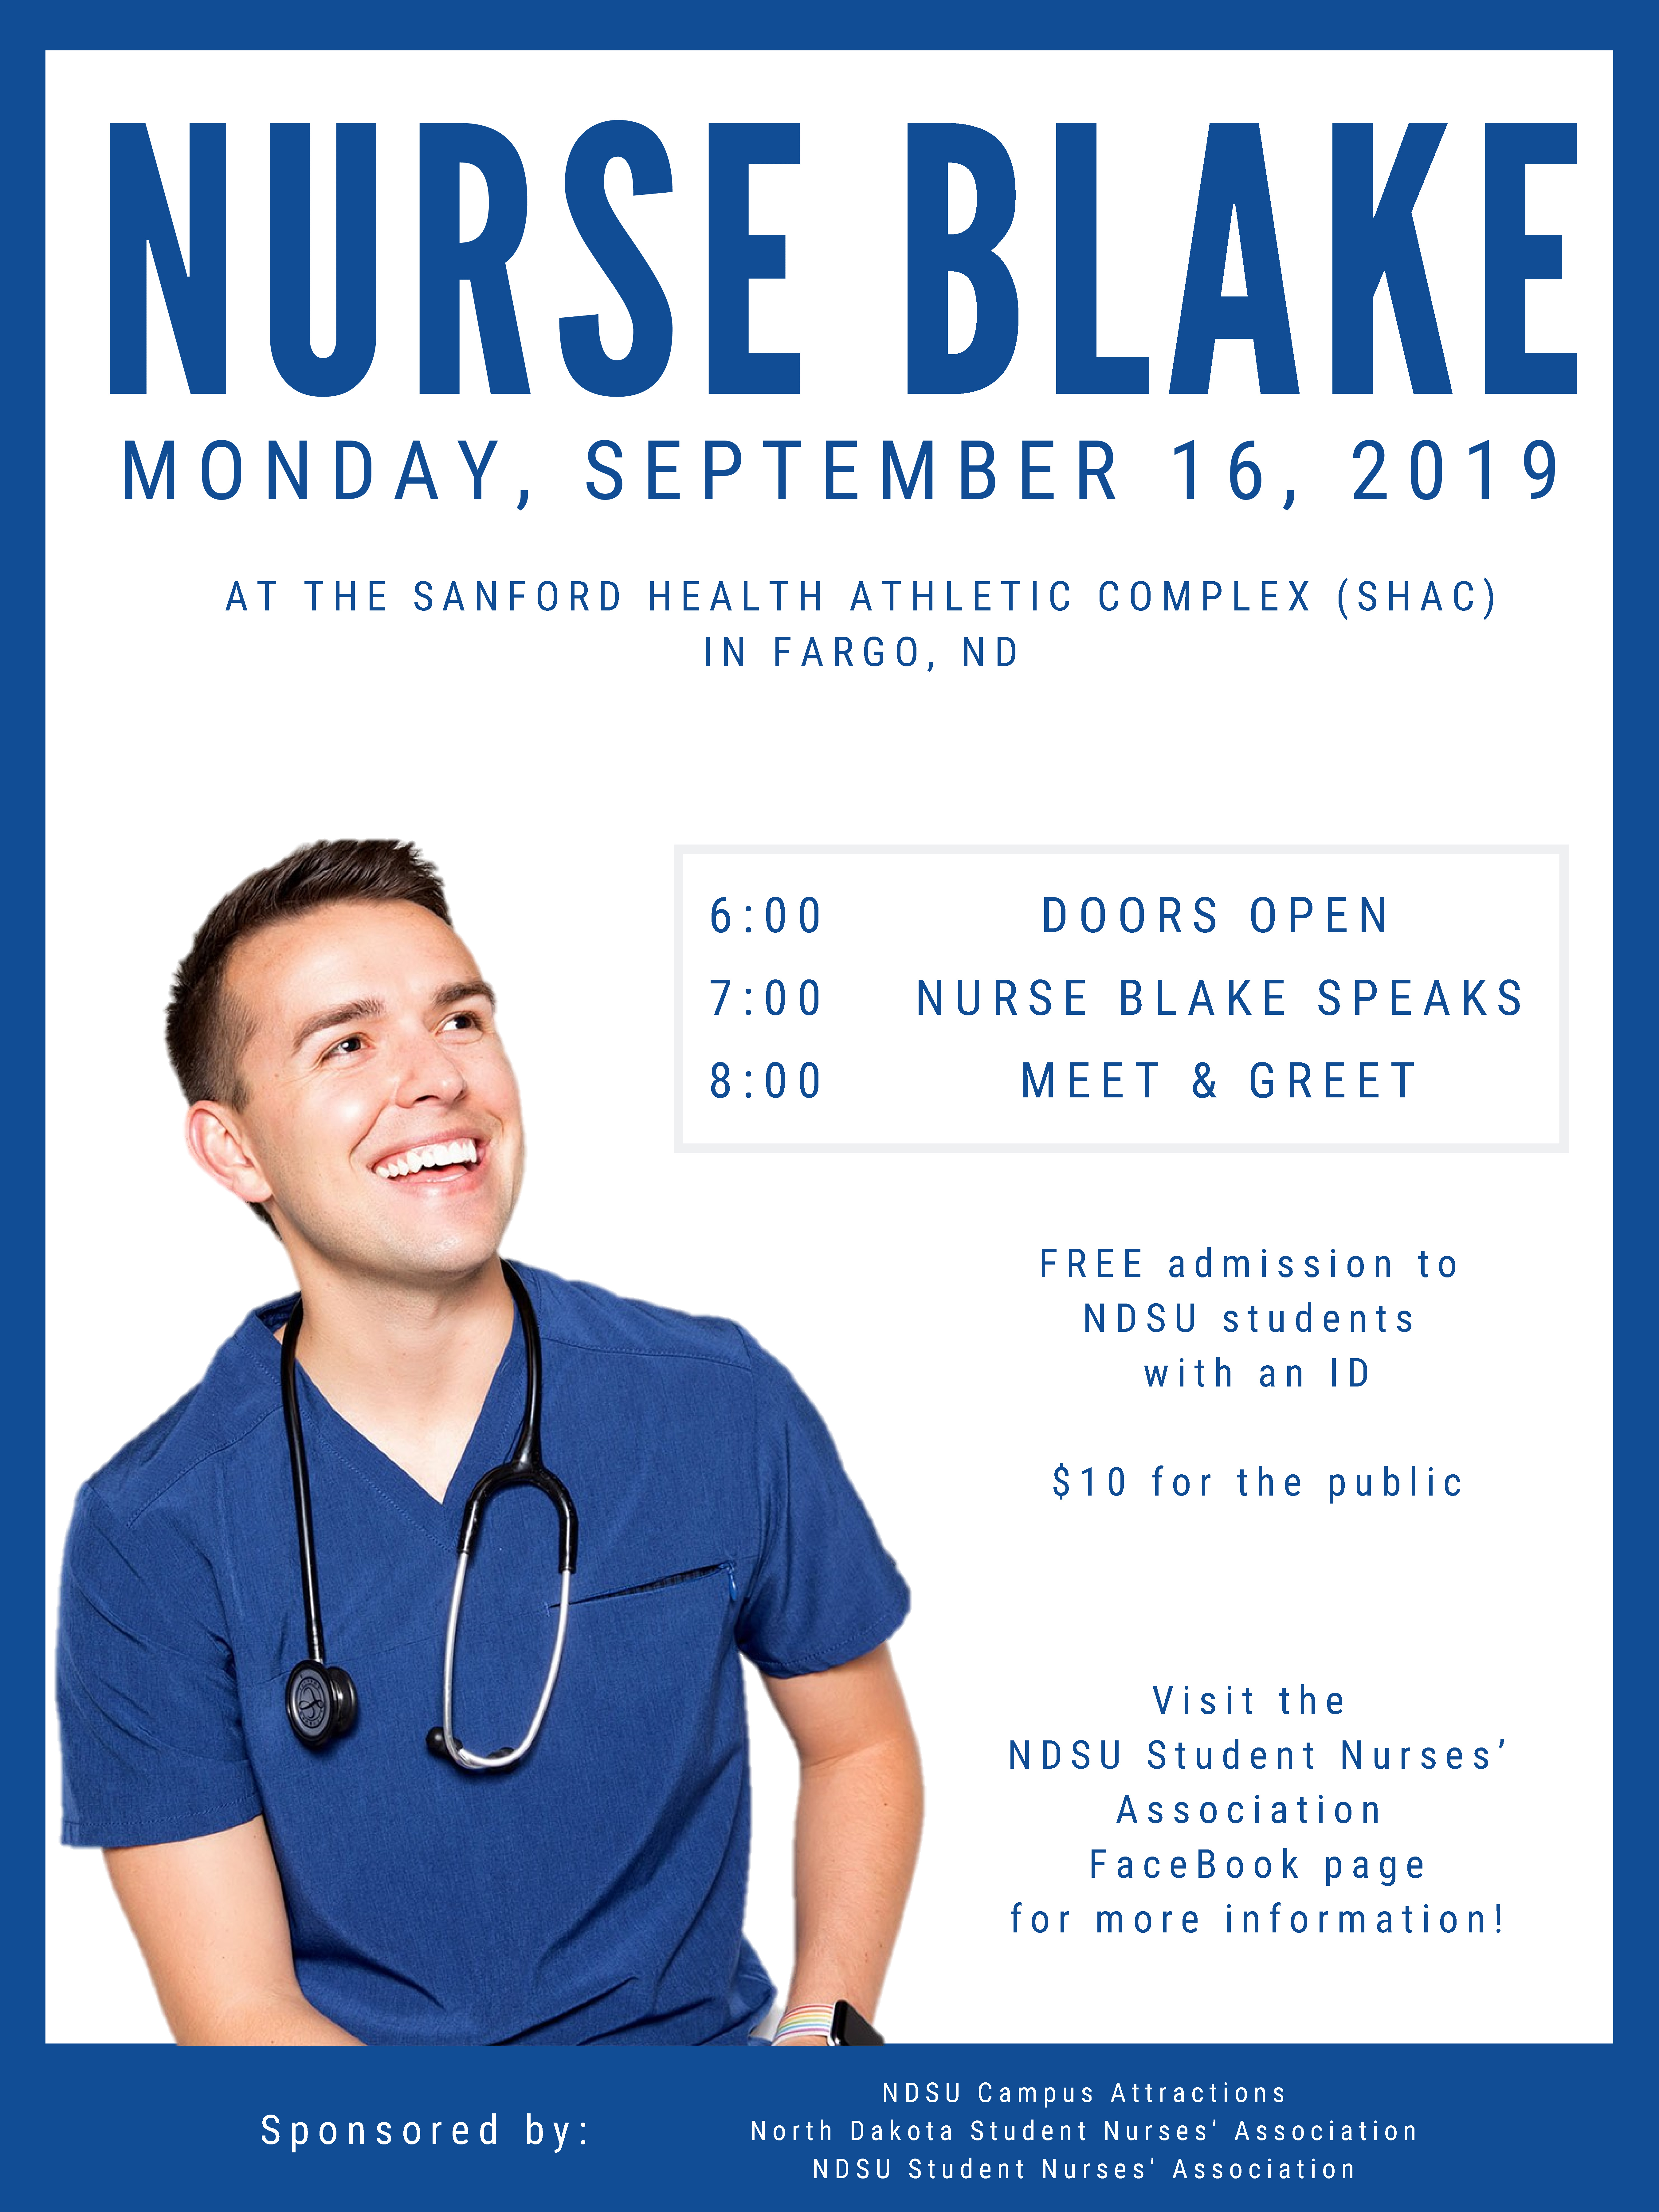 Nurse Blake to give talk at NDSU